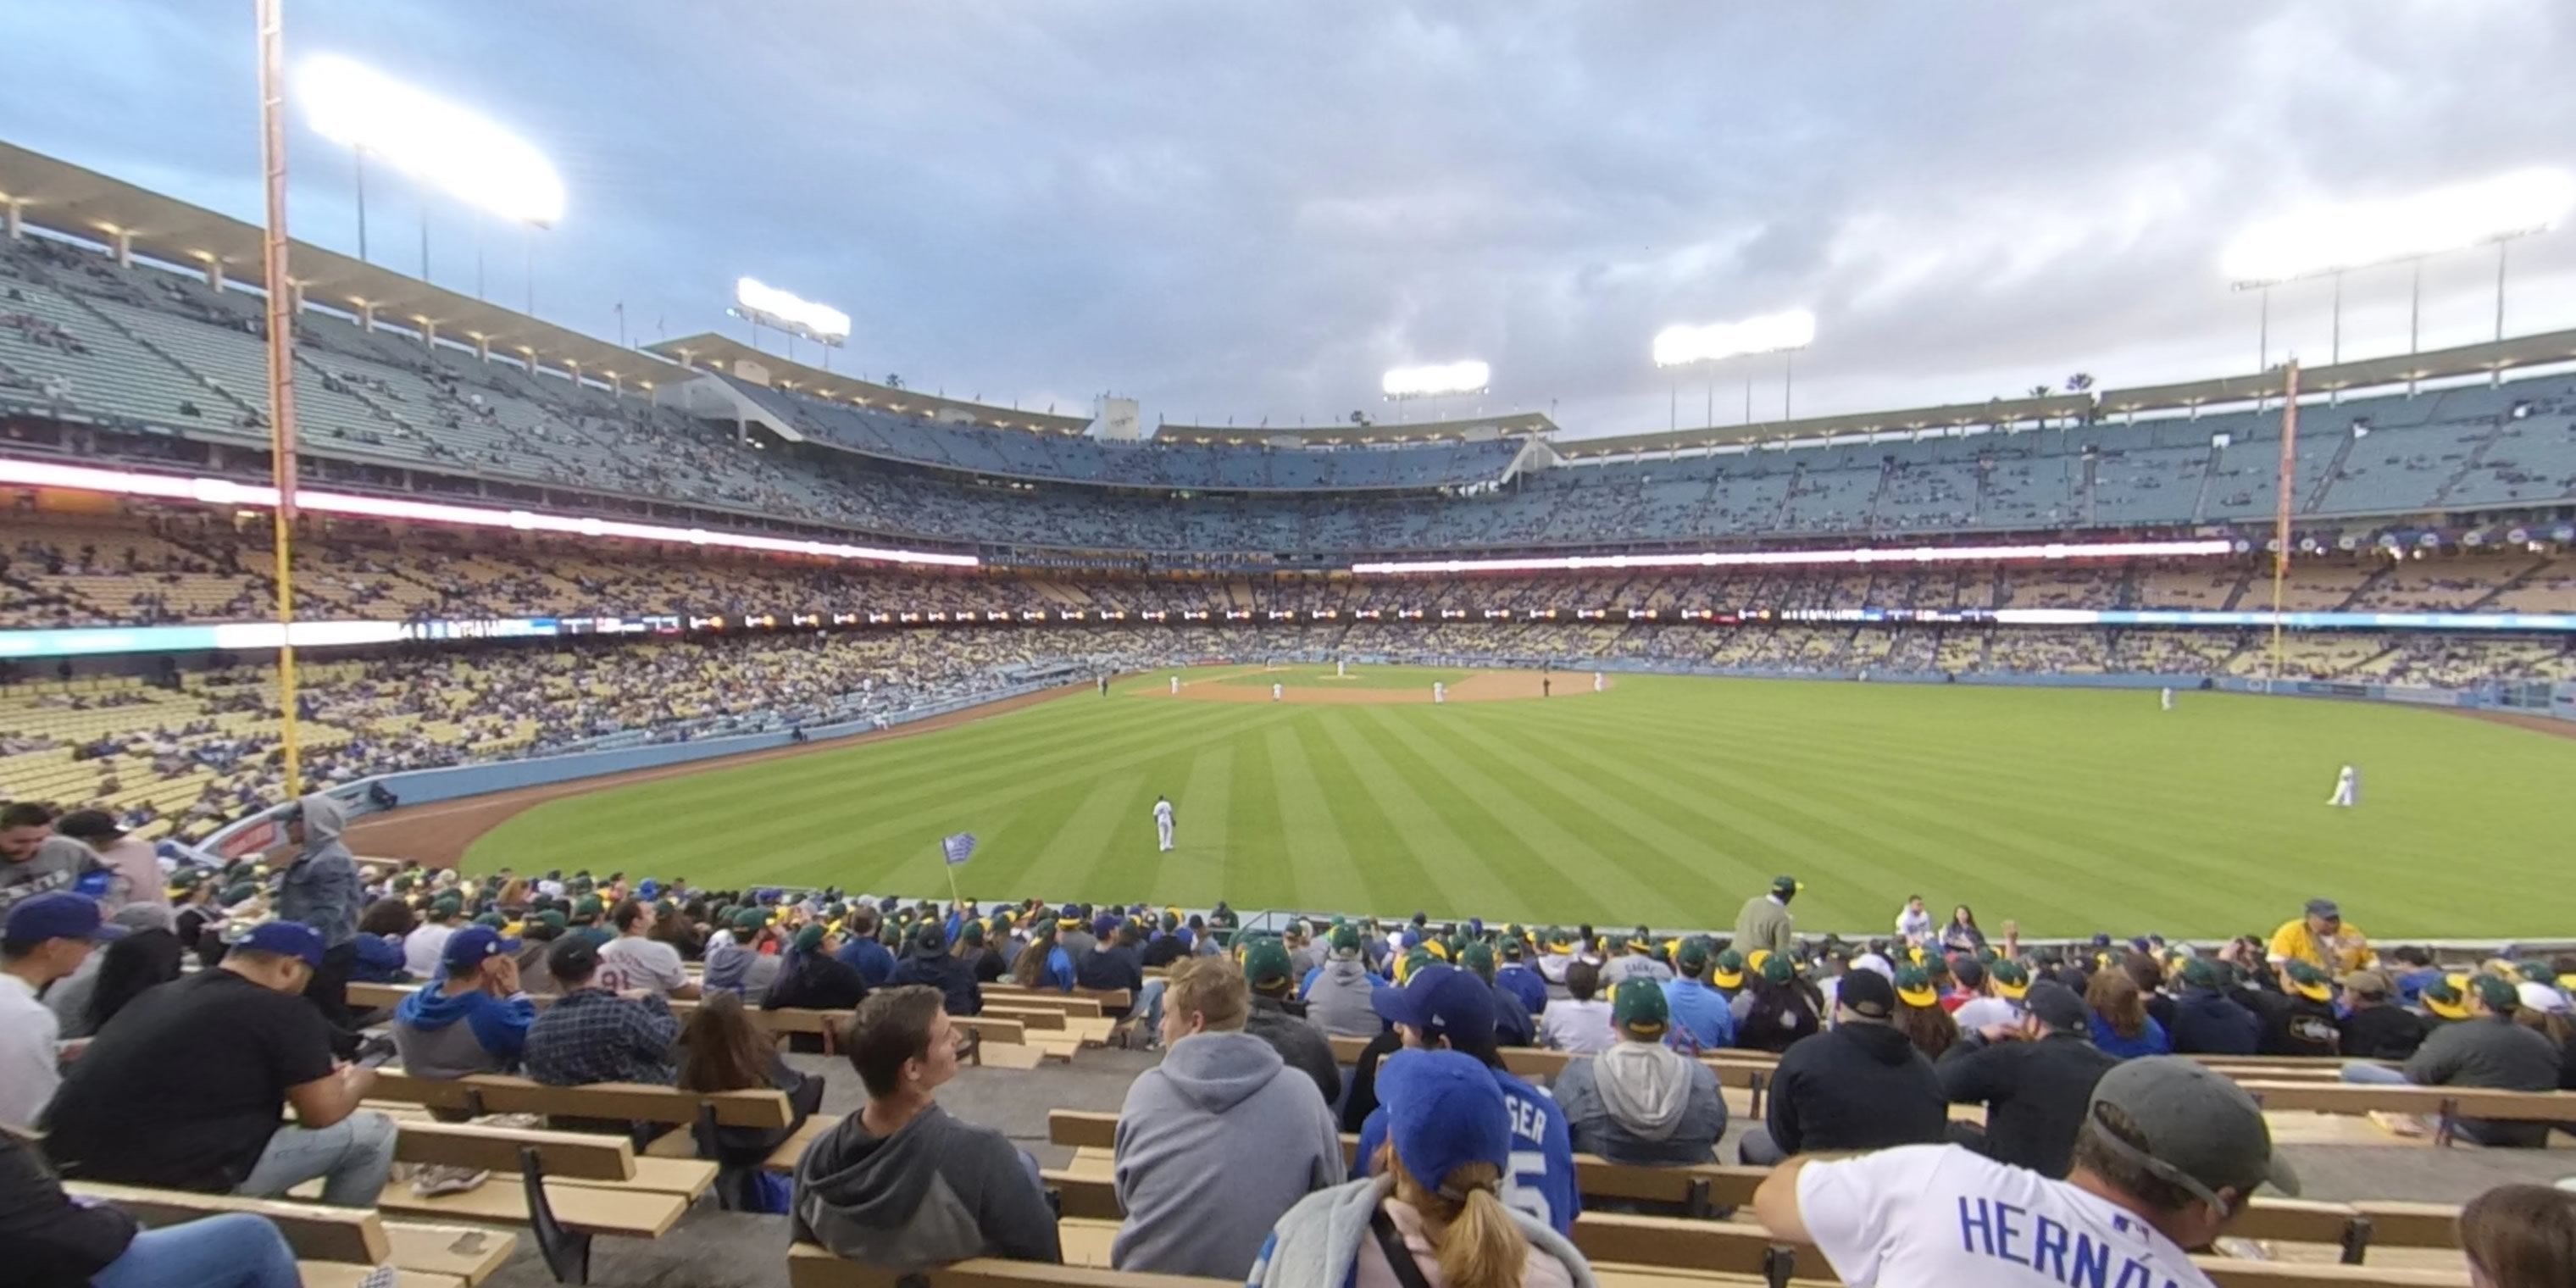 section 306 panoramic seat view  - dodger stadium